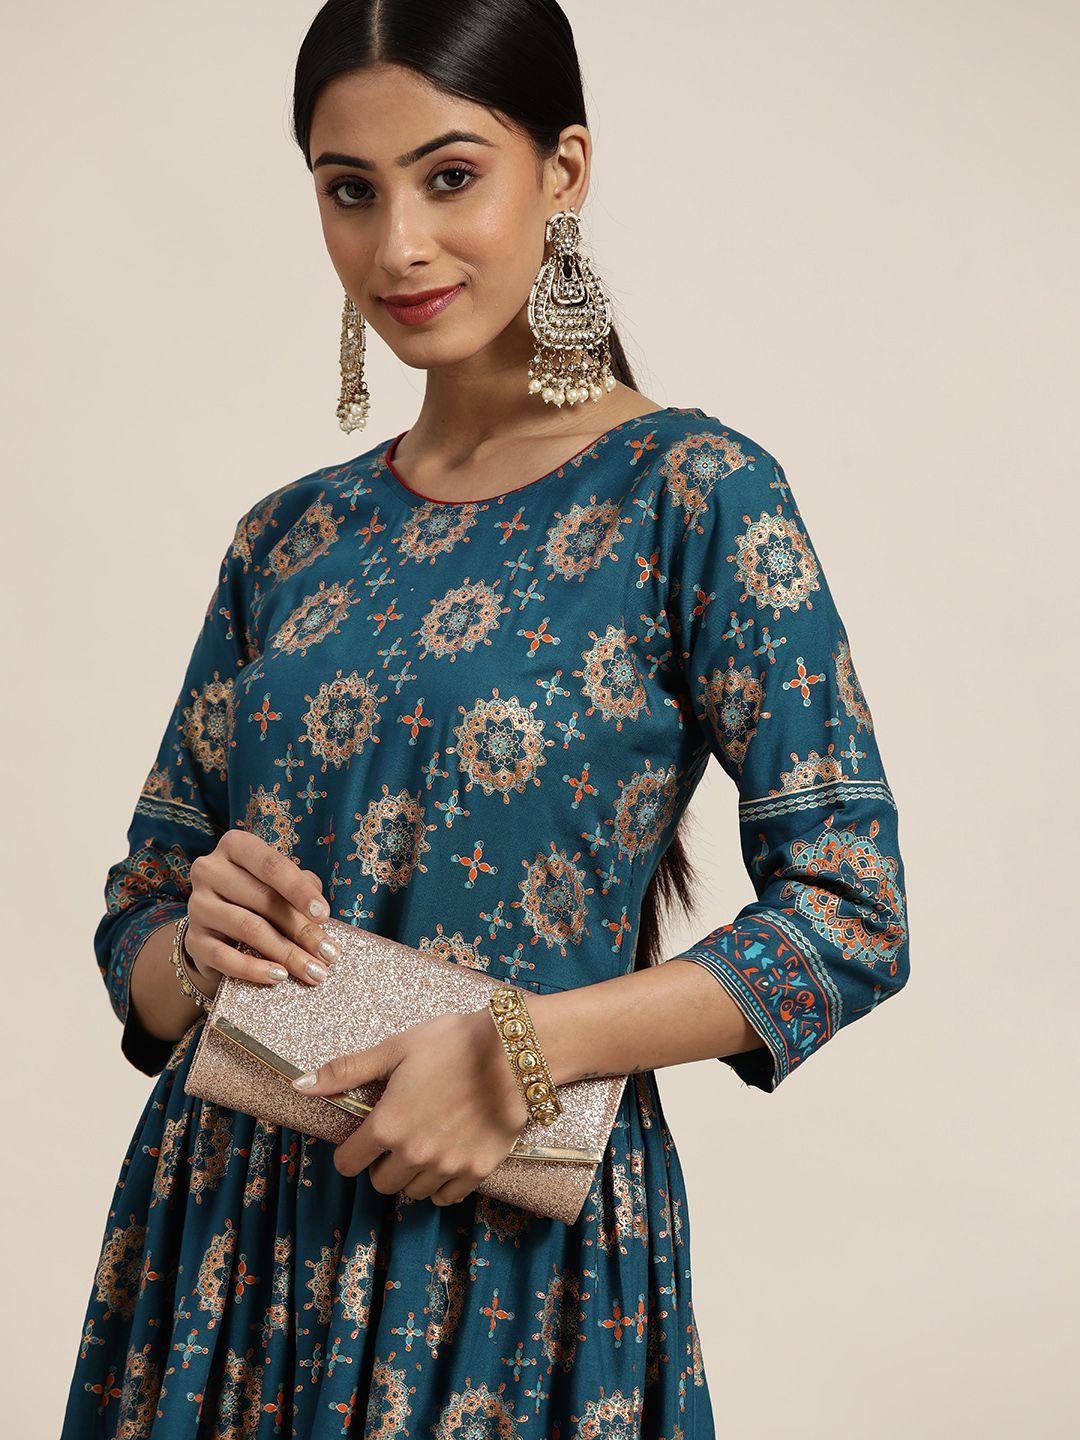 sangria-teal-blue-&-gold-toned-ethnic-motifs-ethnic-midi-dress